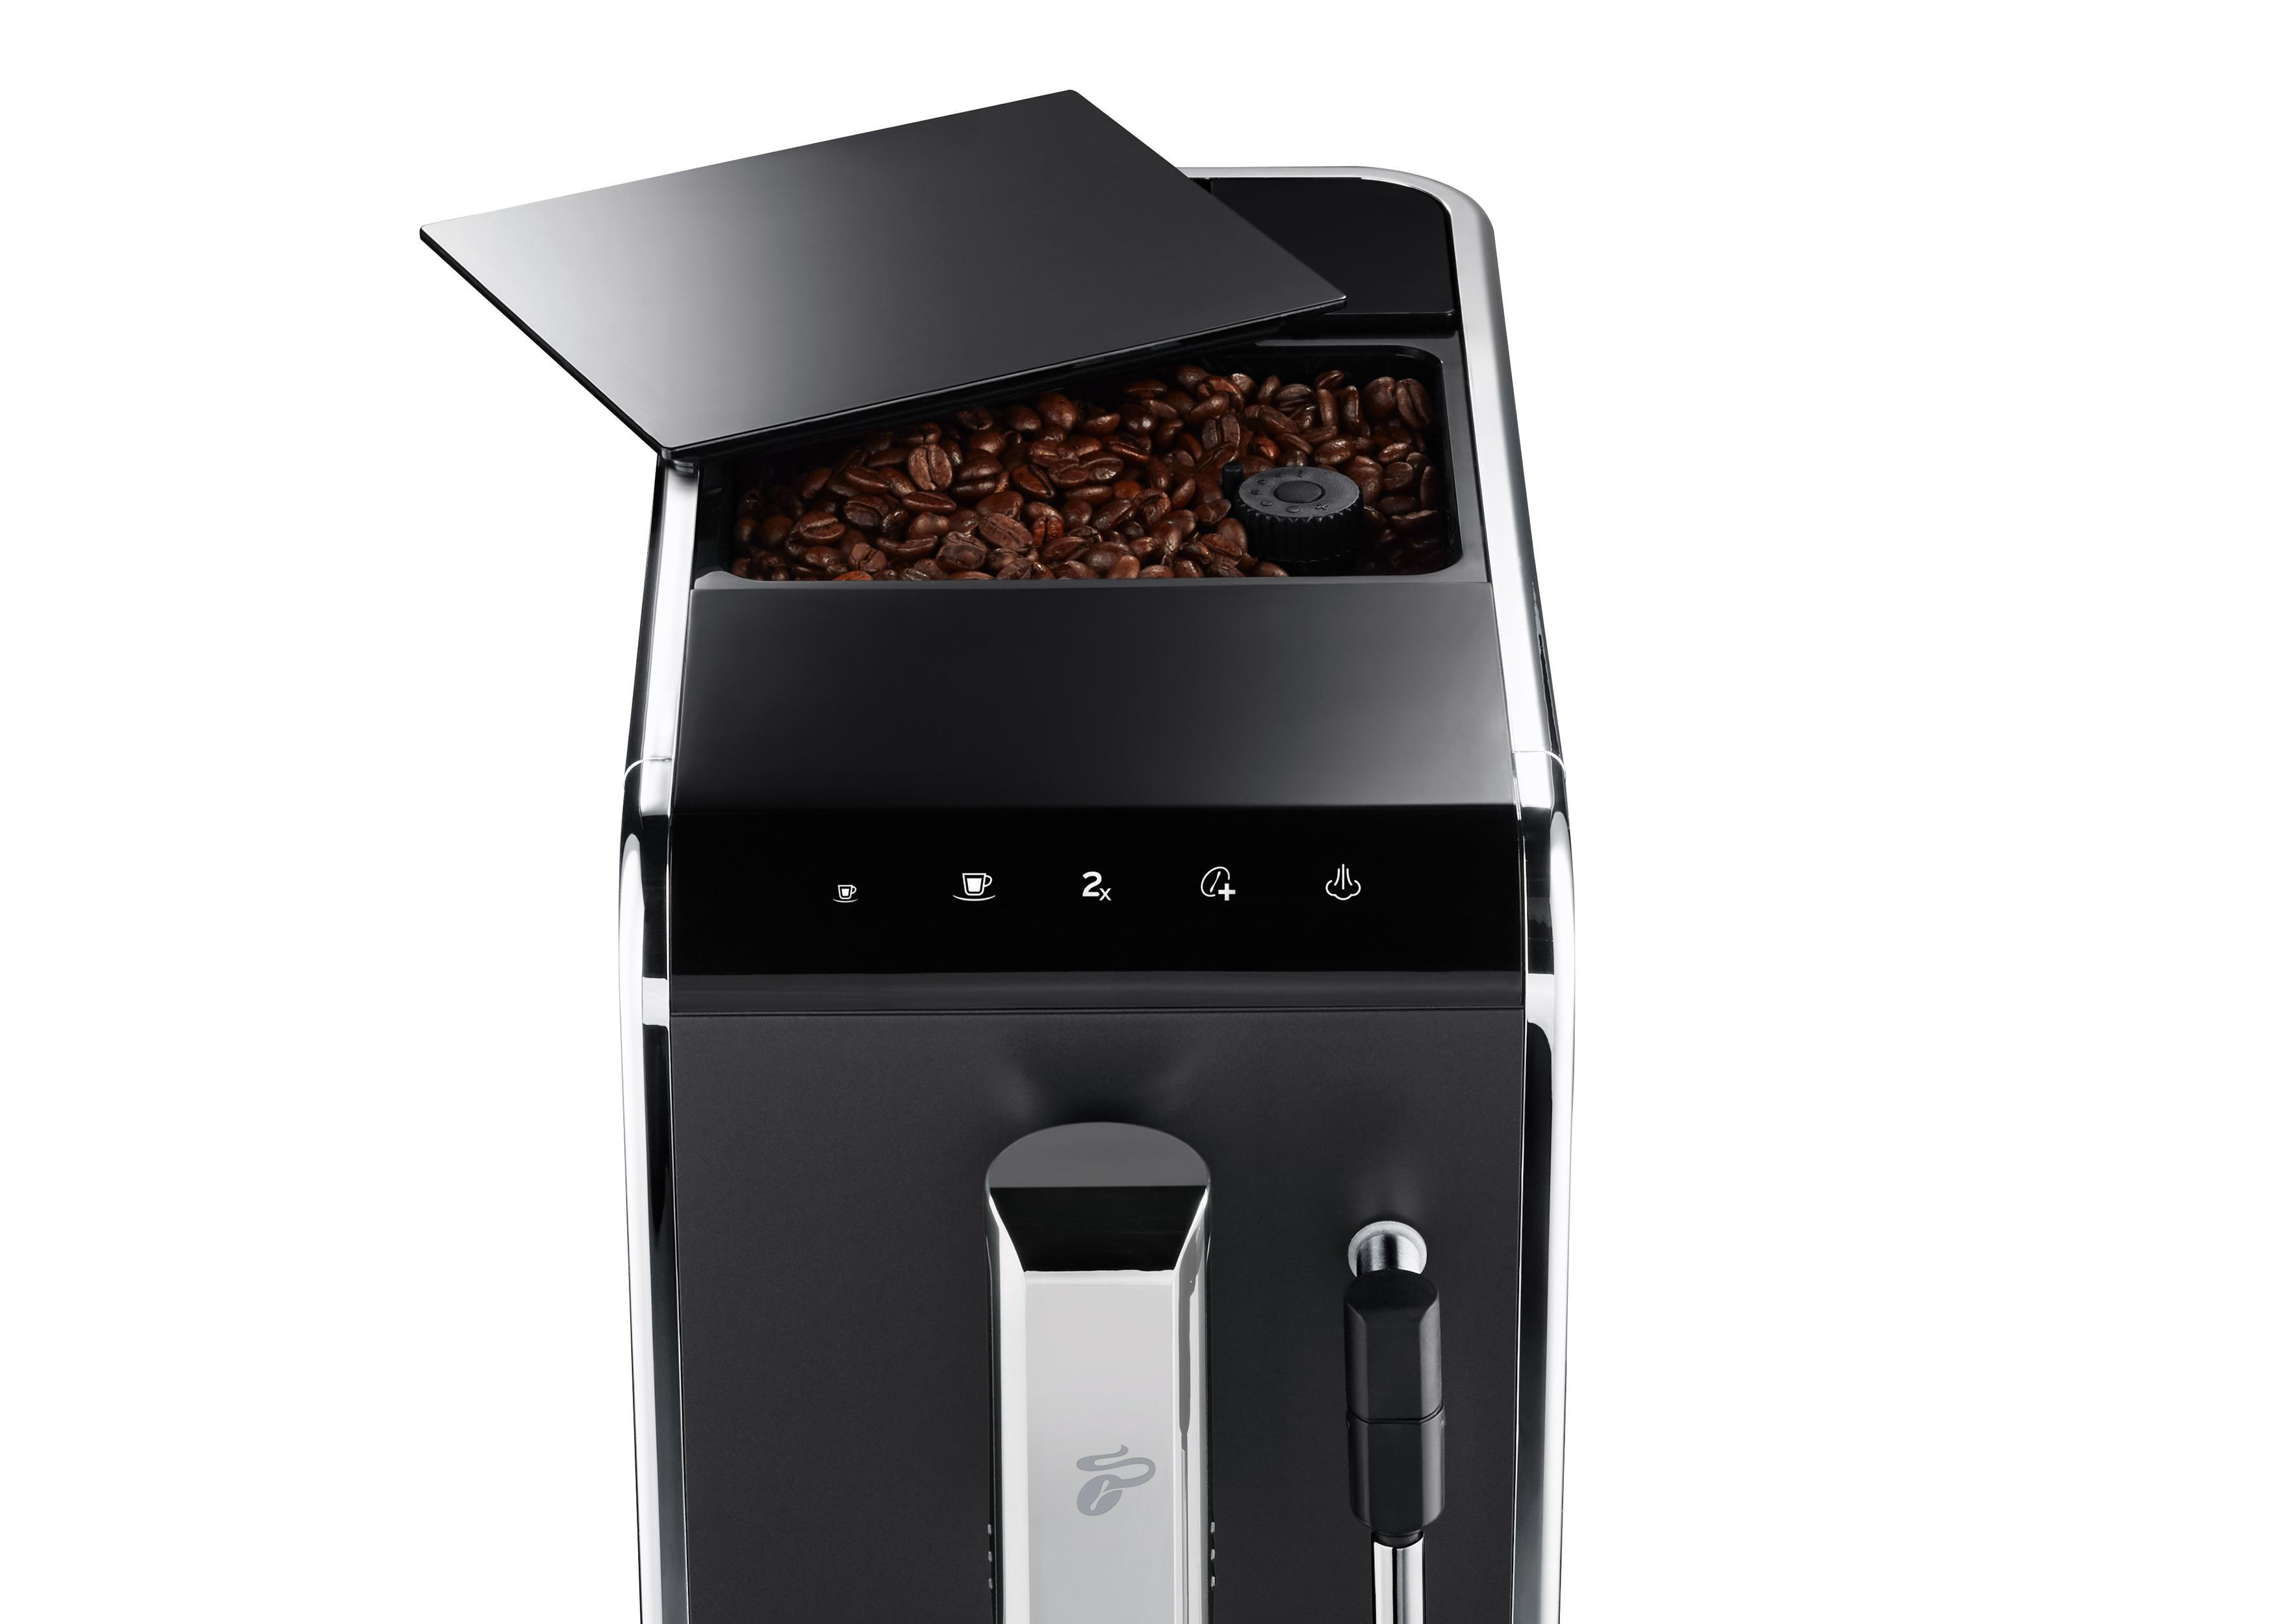 kg Kaffee Anthrazit 1 + TCHIBO Latte Kaffeevollautomat Esperto